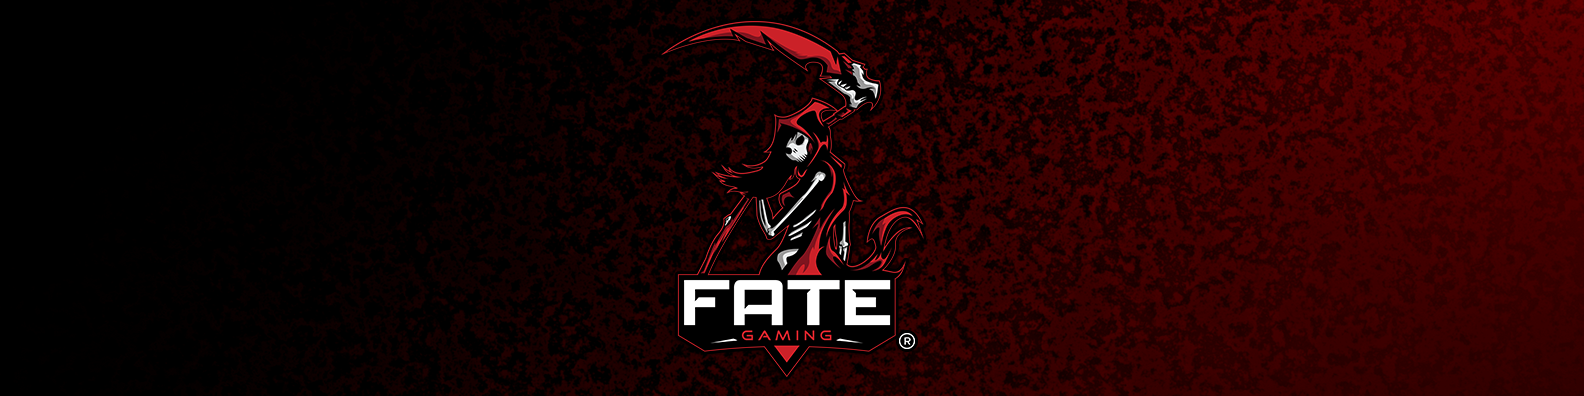 Fate Gaming LLC Banner